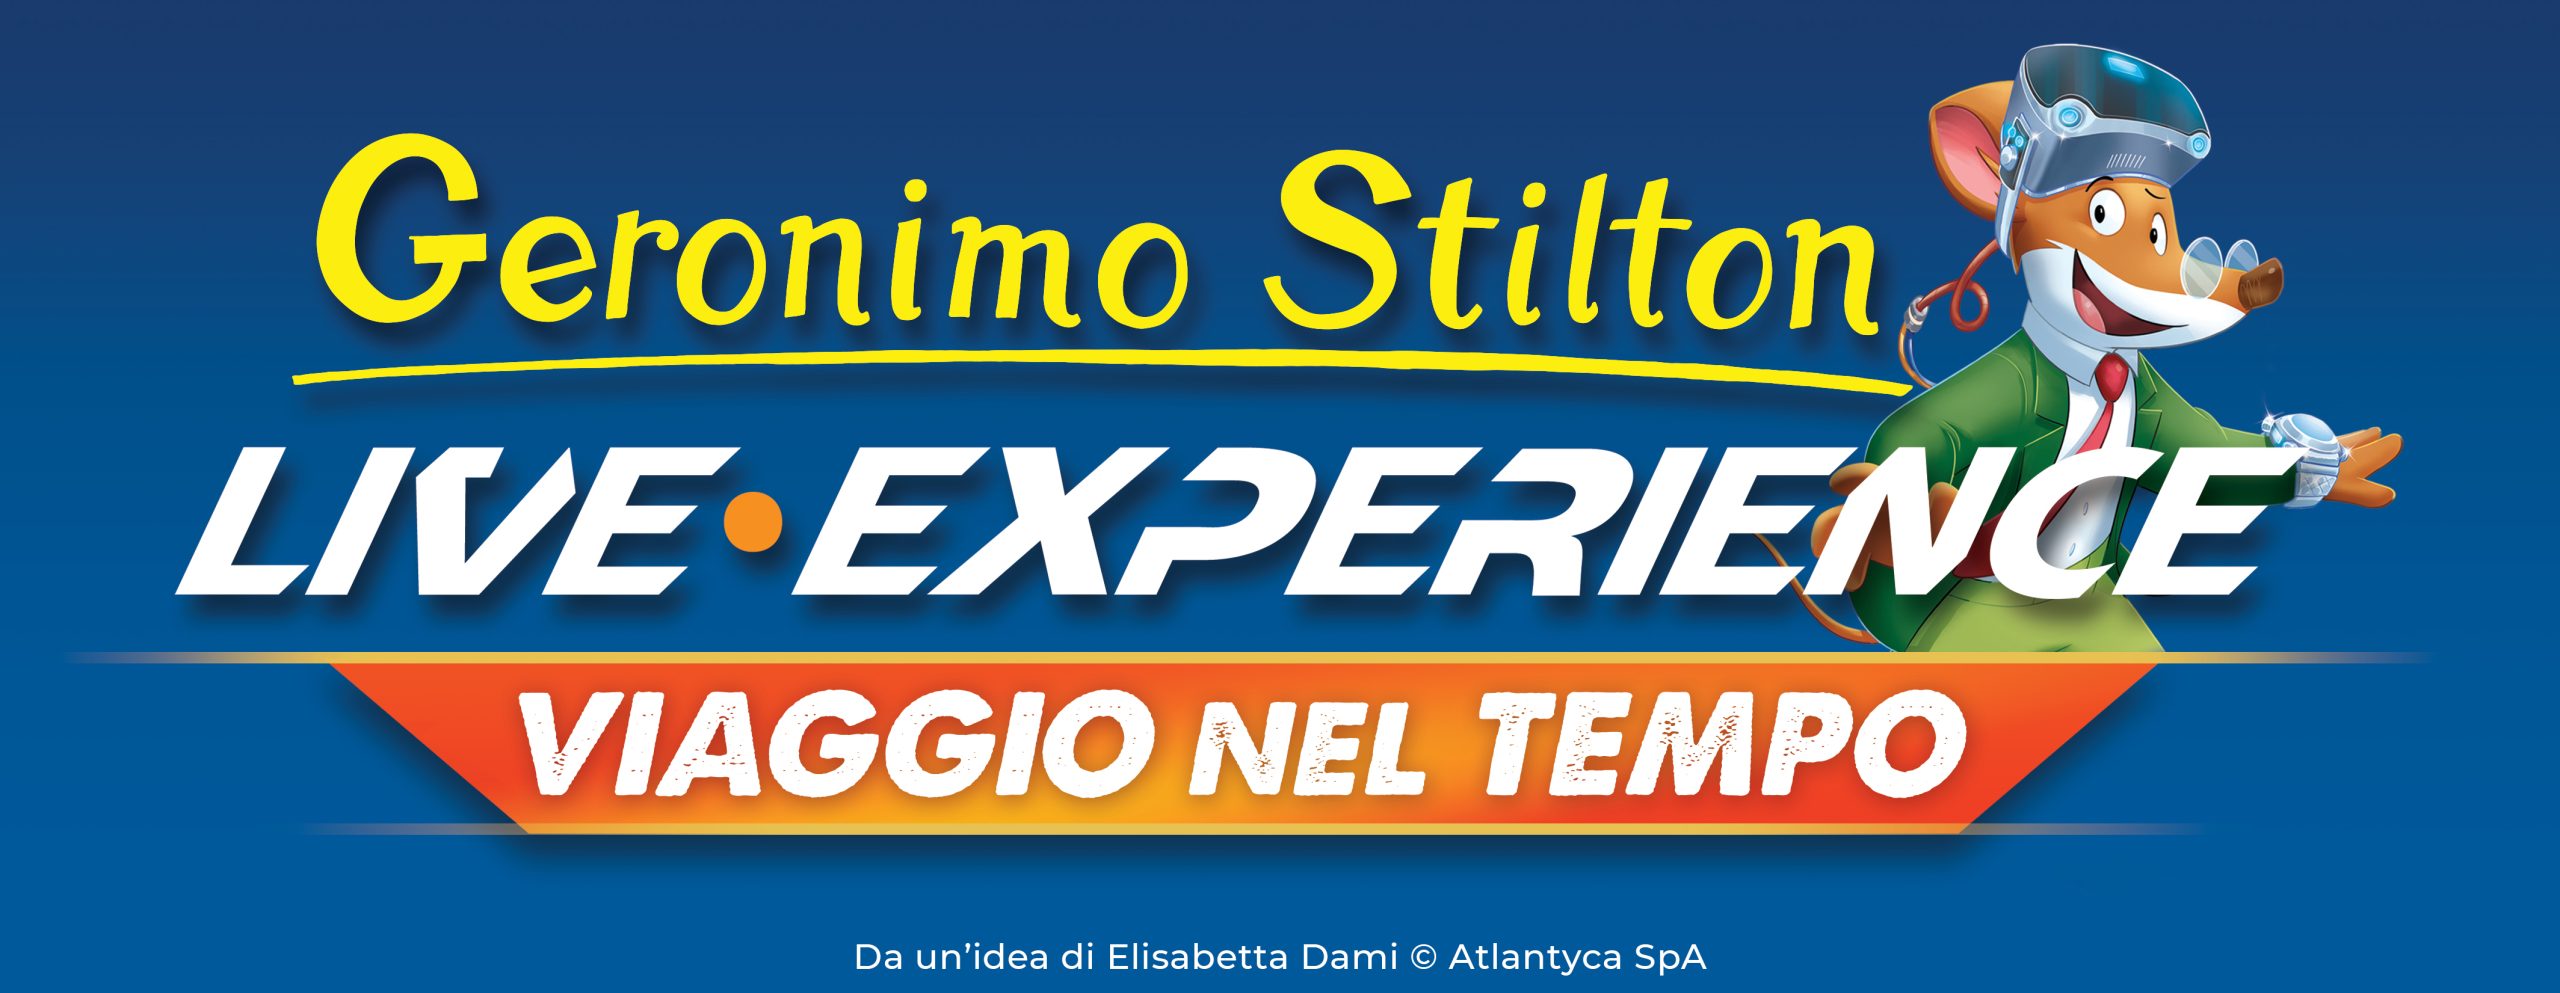 Geronimo Stilton Experience